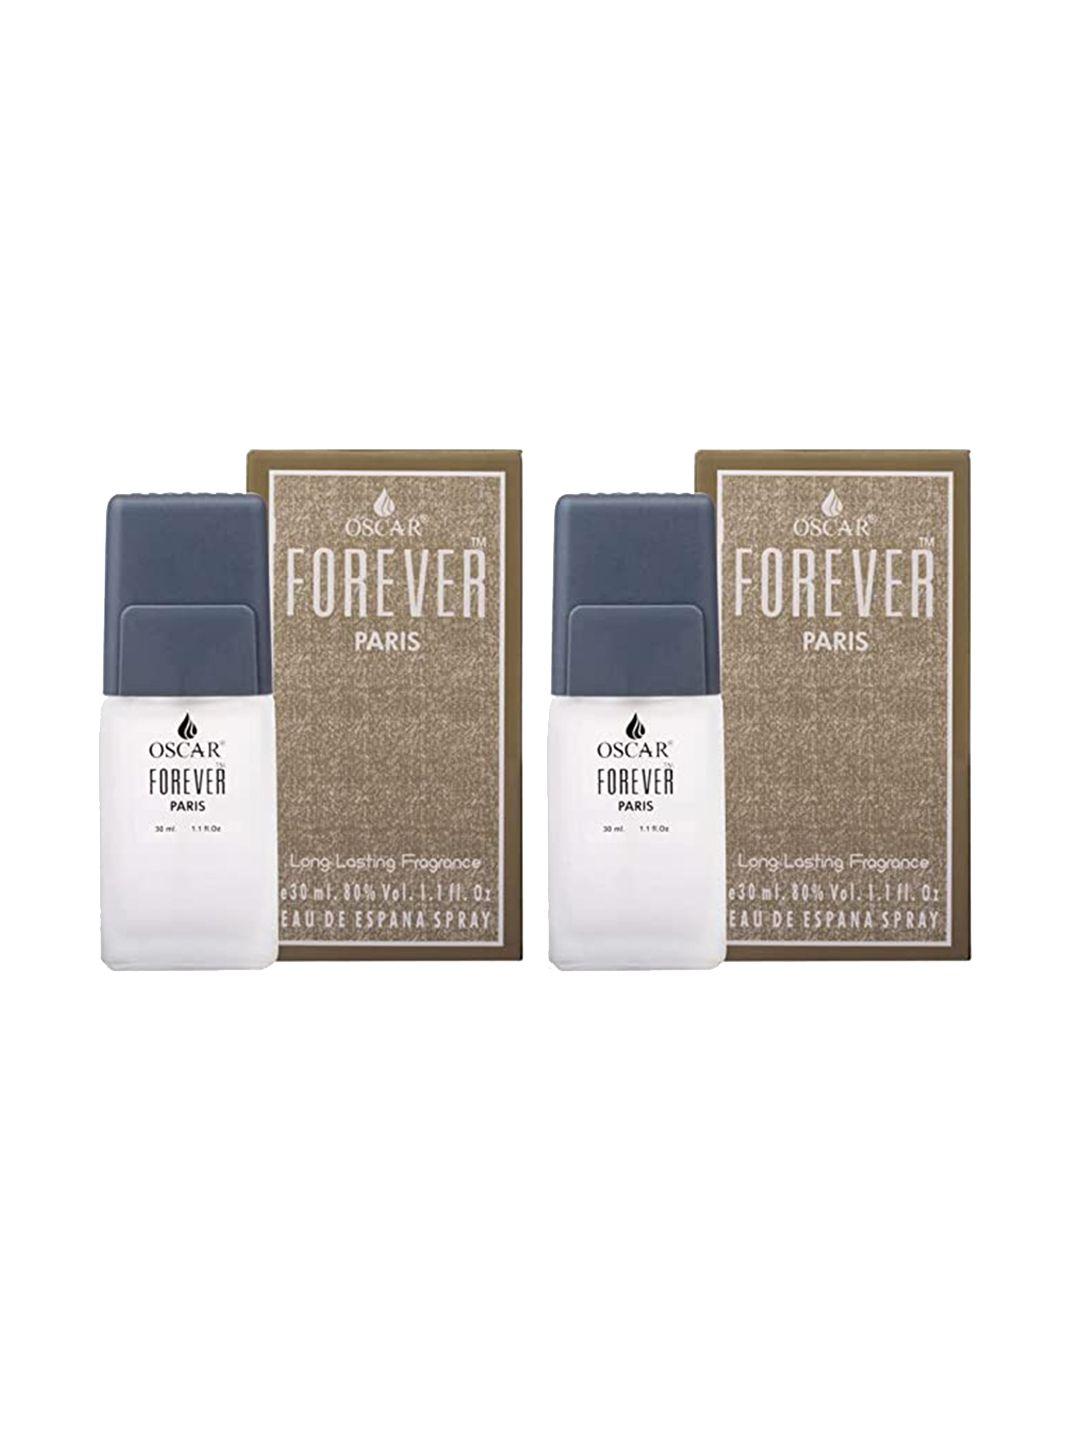 oscar forever chypre set of 2 long lasting perfume - 30 ml each